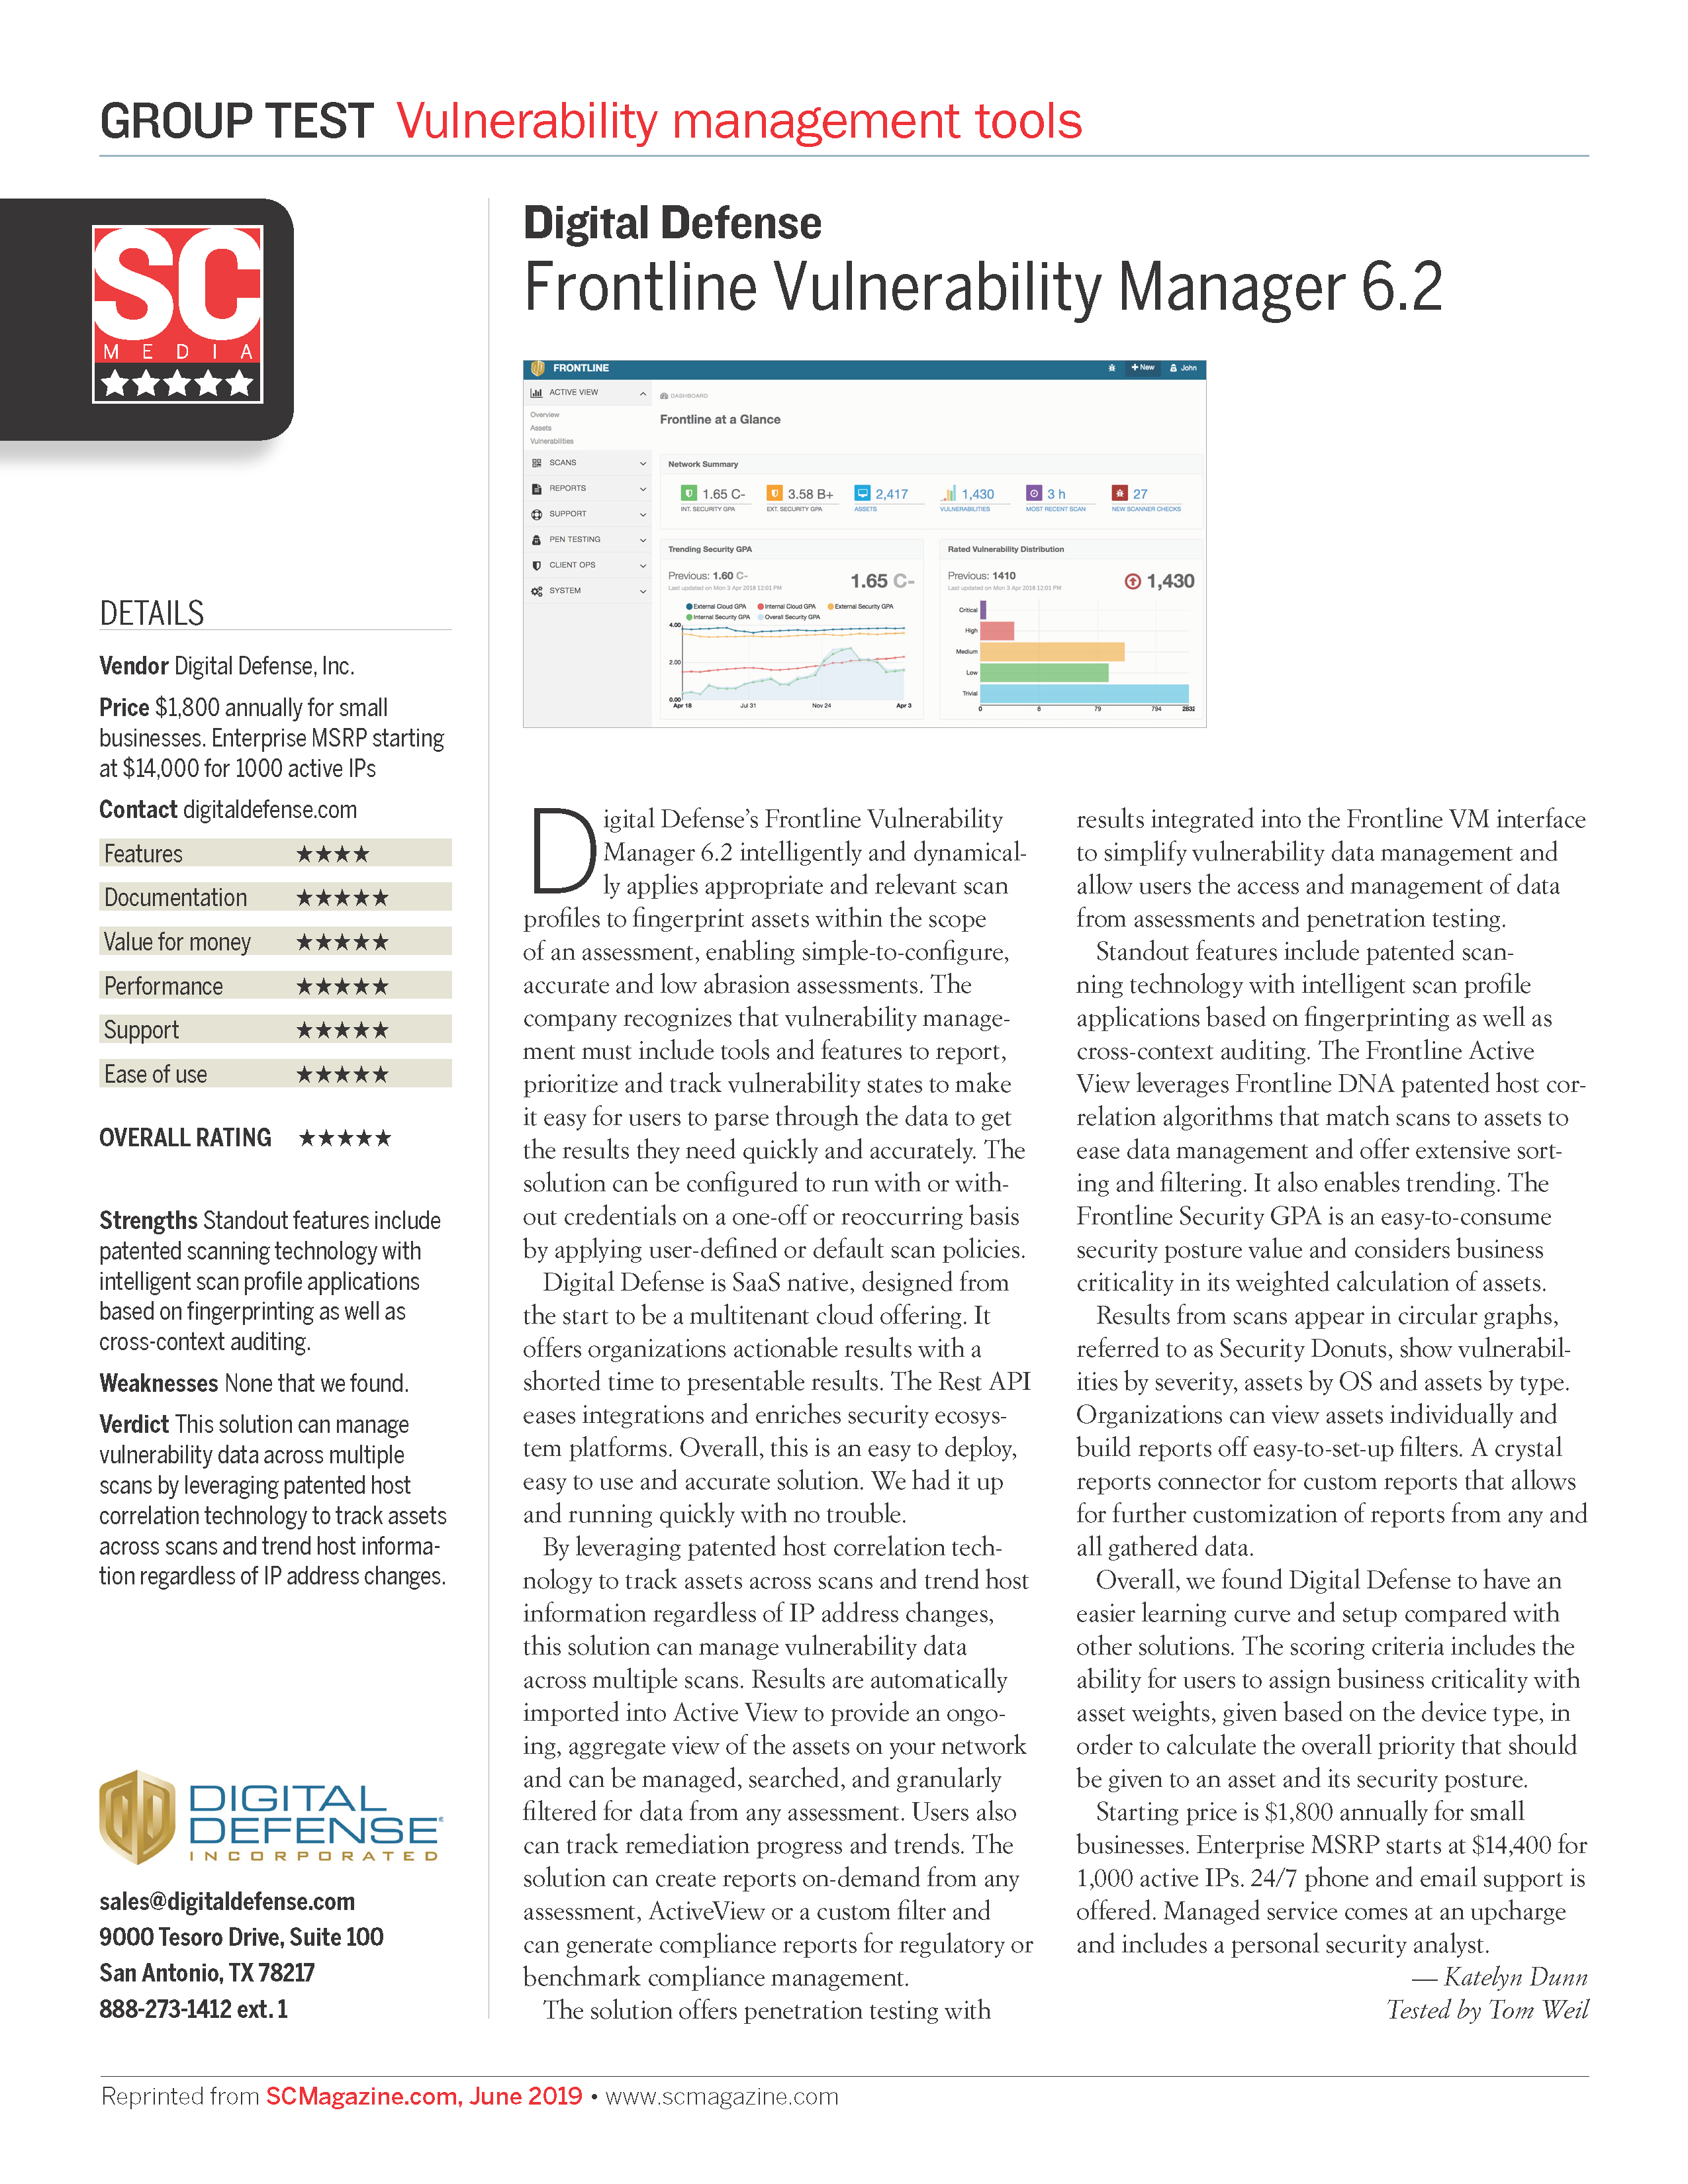 Frontline Vulnerability Media Review